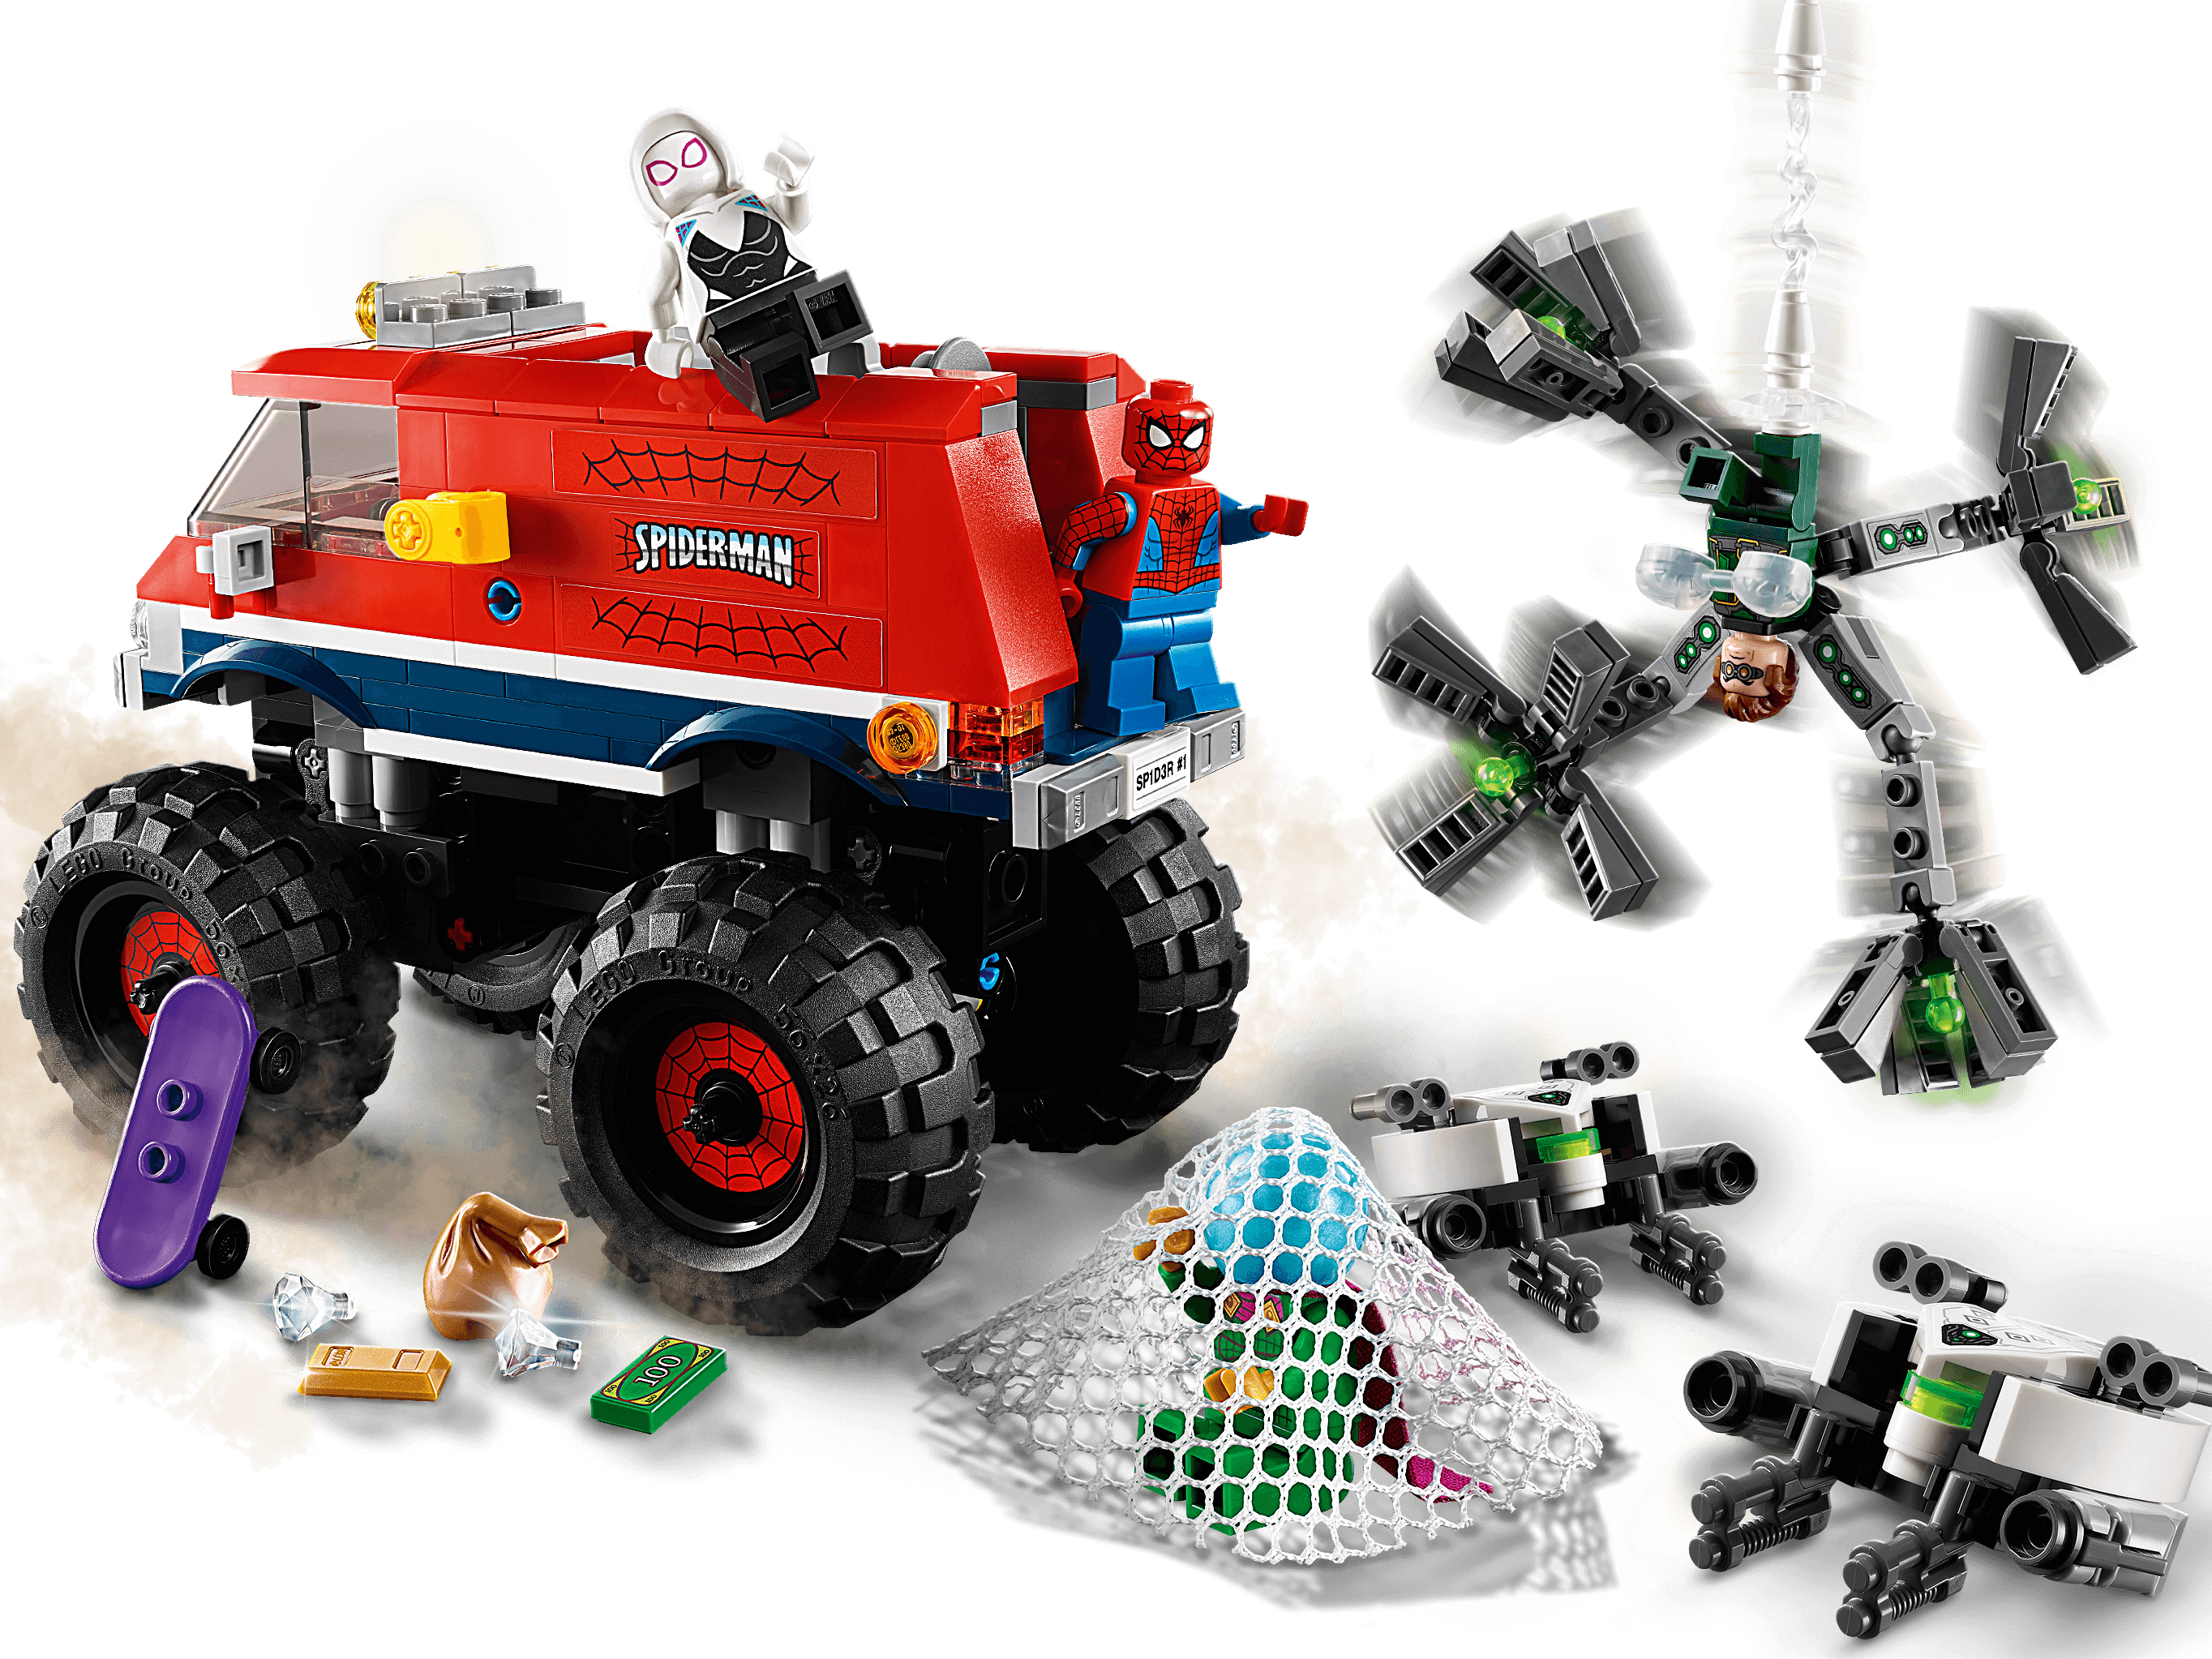 LEGO Spider-Man vehicles*READ DESCRIPTION*  (76114+76150+76115+76174+76173+76148)